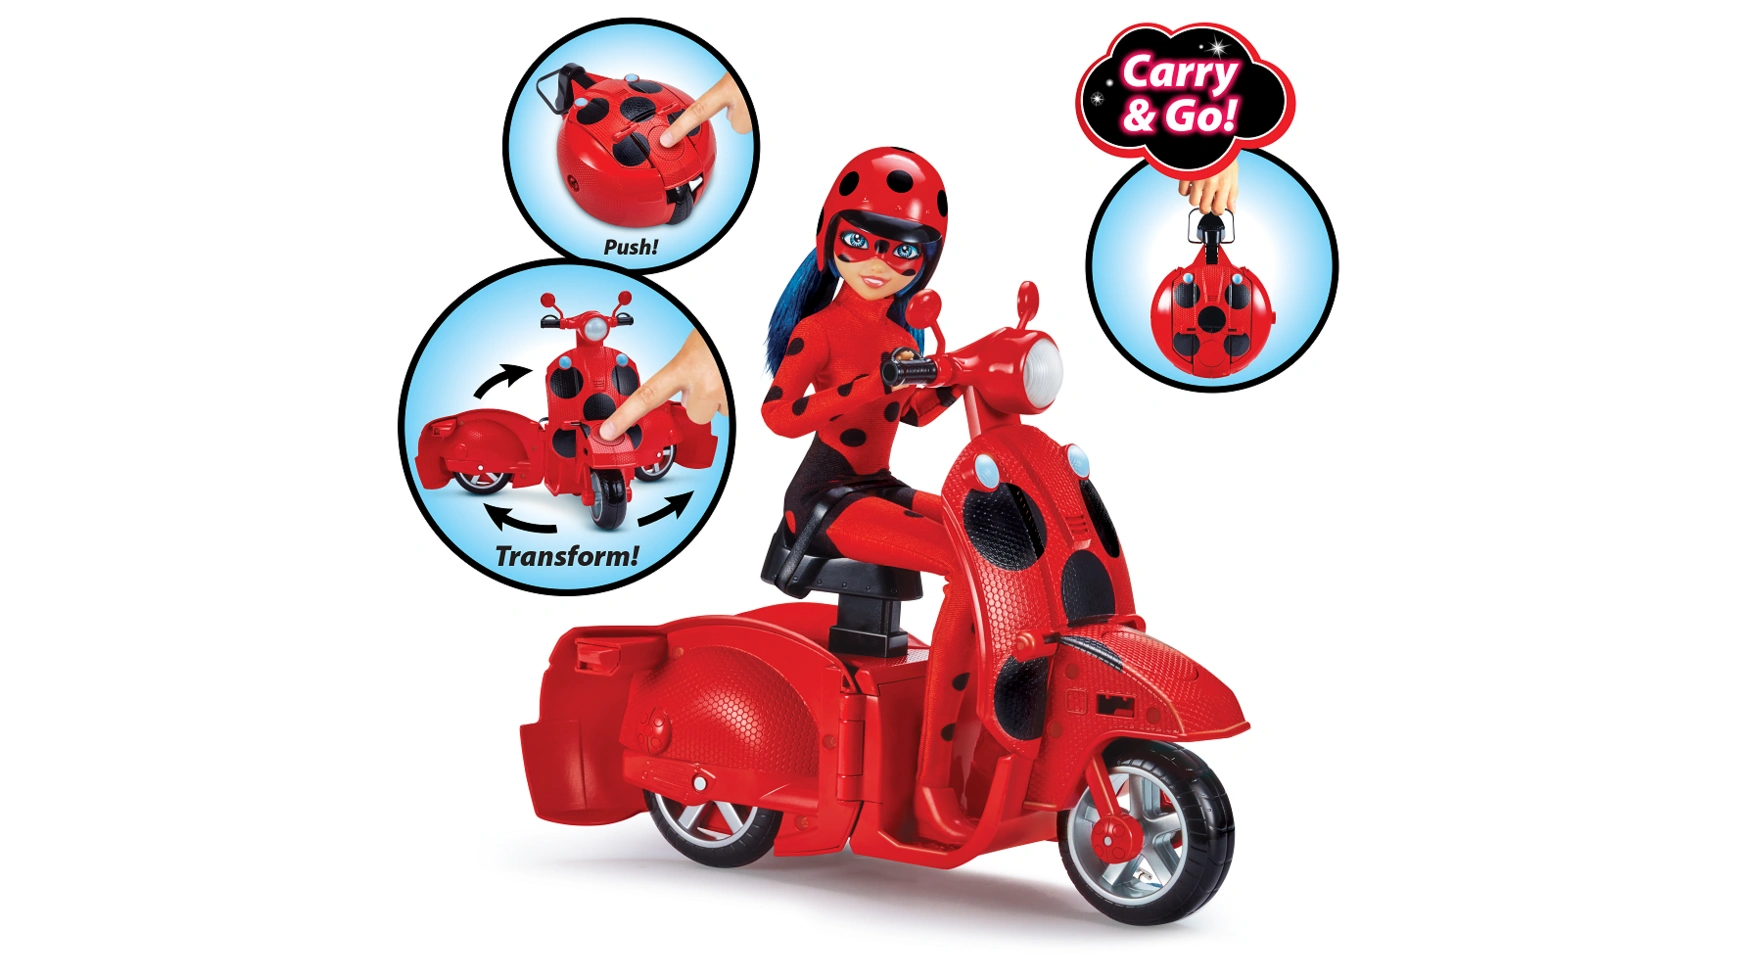 Bandai Чудесная кукла Божья коровка Lucky Charm со скутером Switch 'n go цена и фото